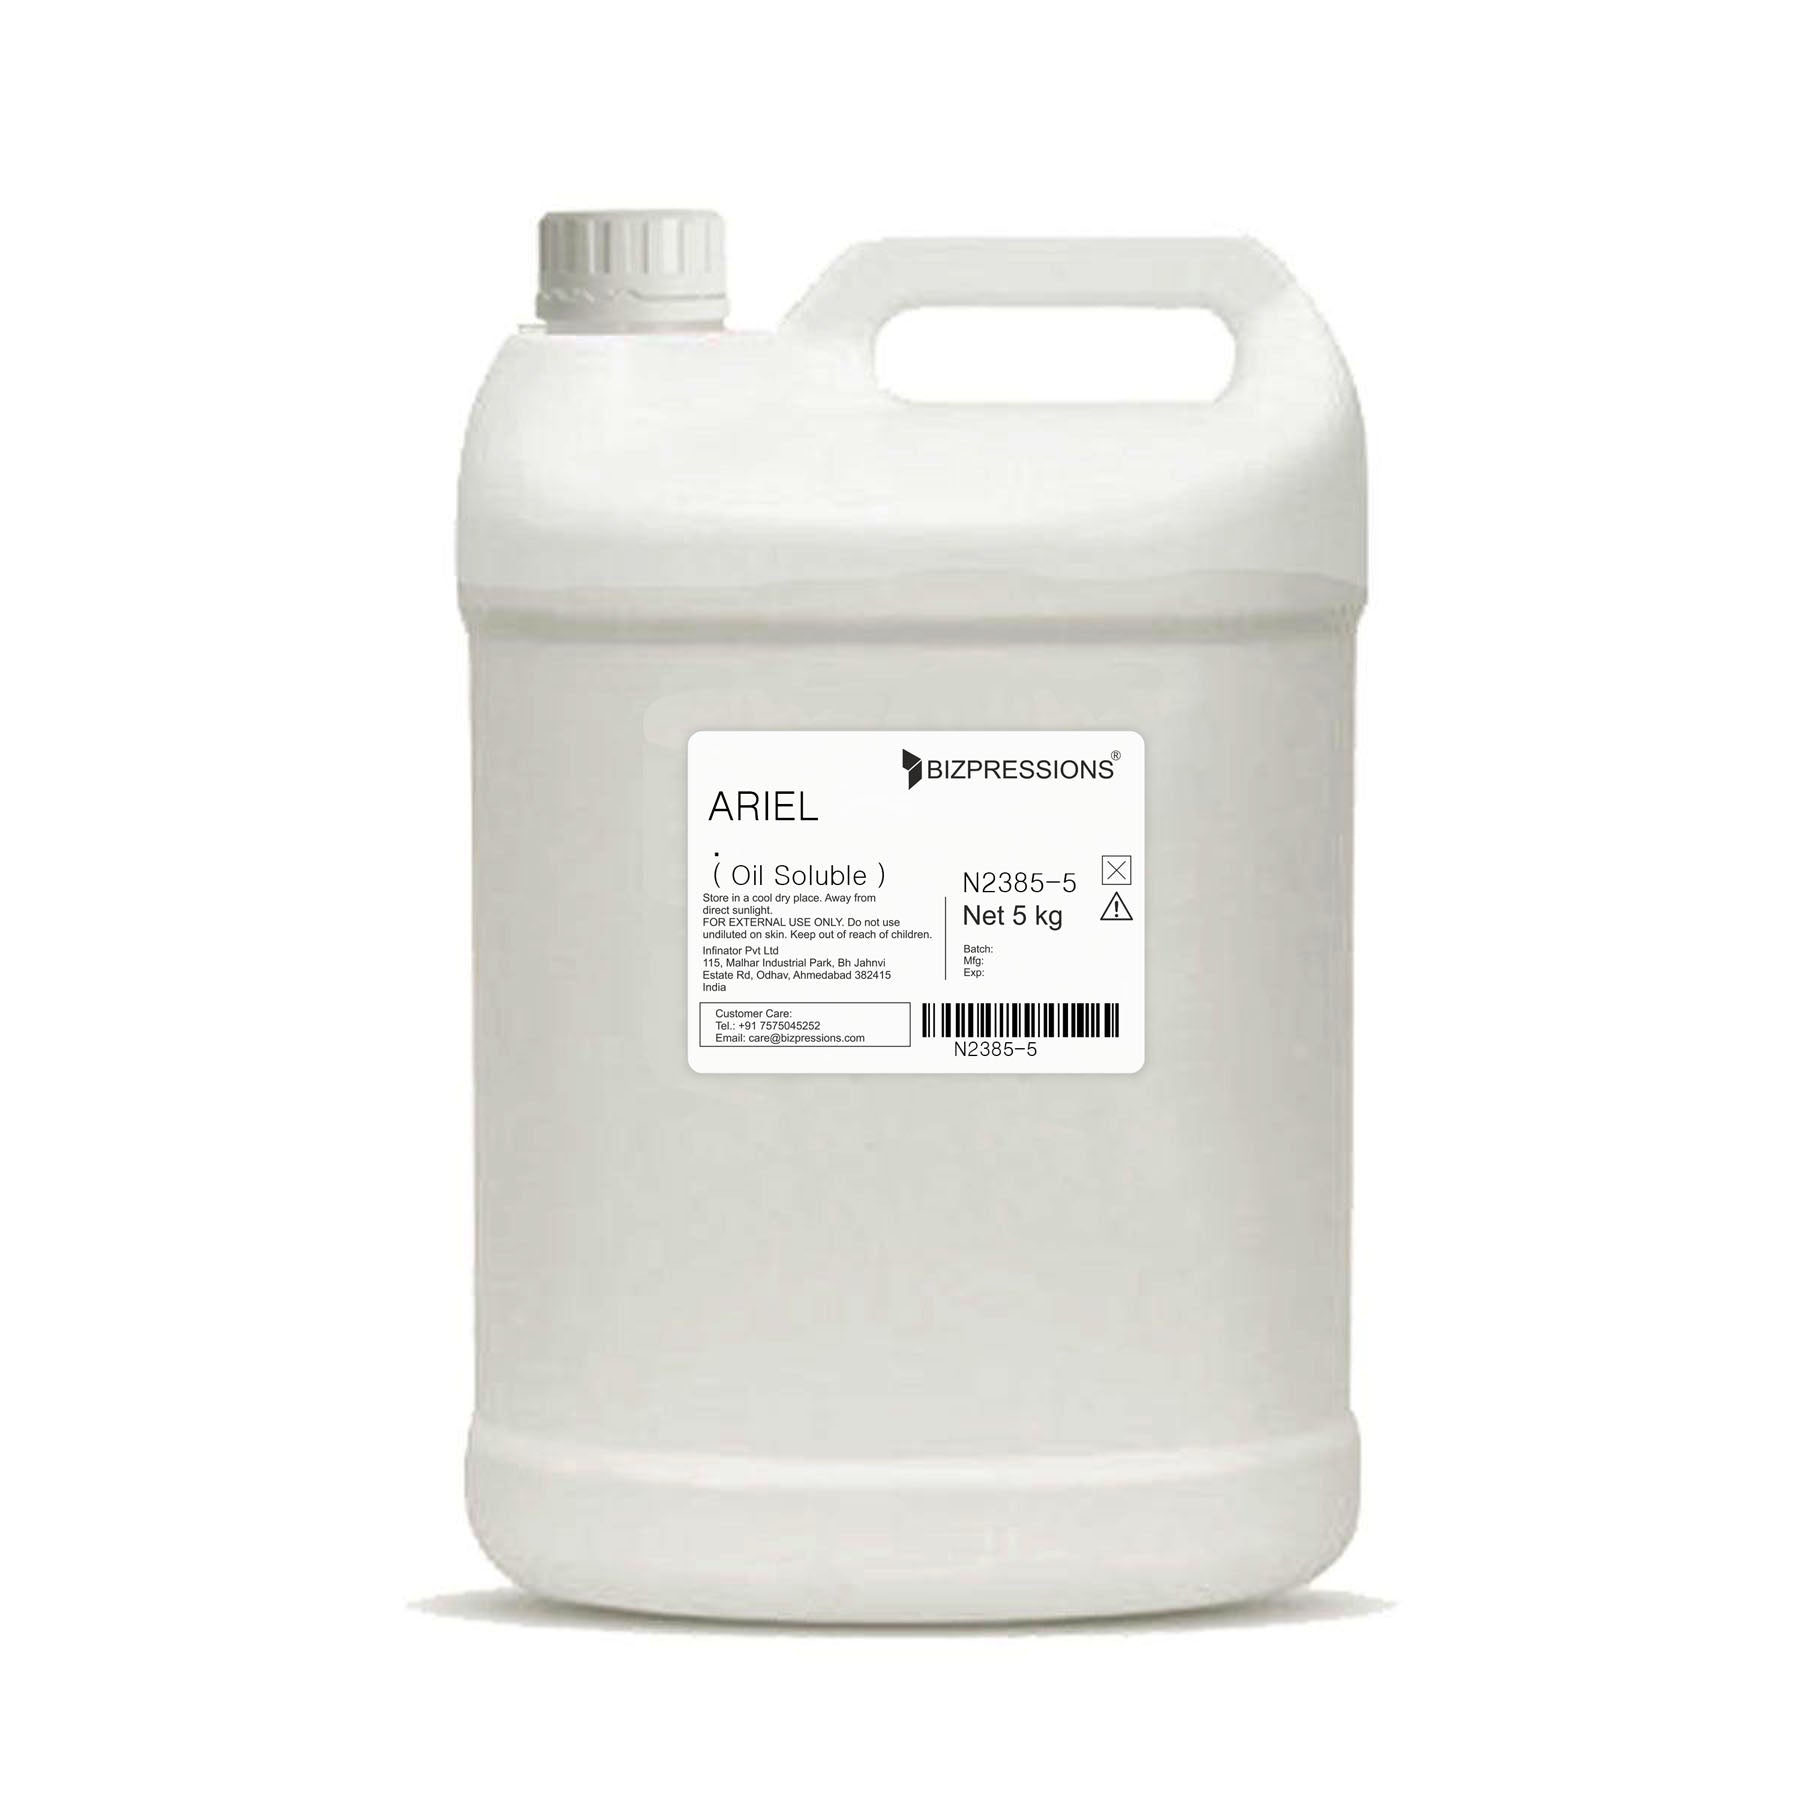 ARIEL - Fragrance ( Oil Soluble ) - 5 kg